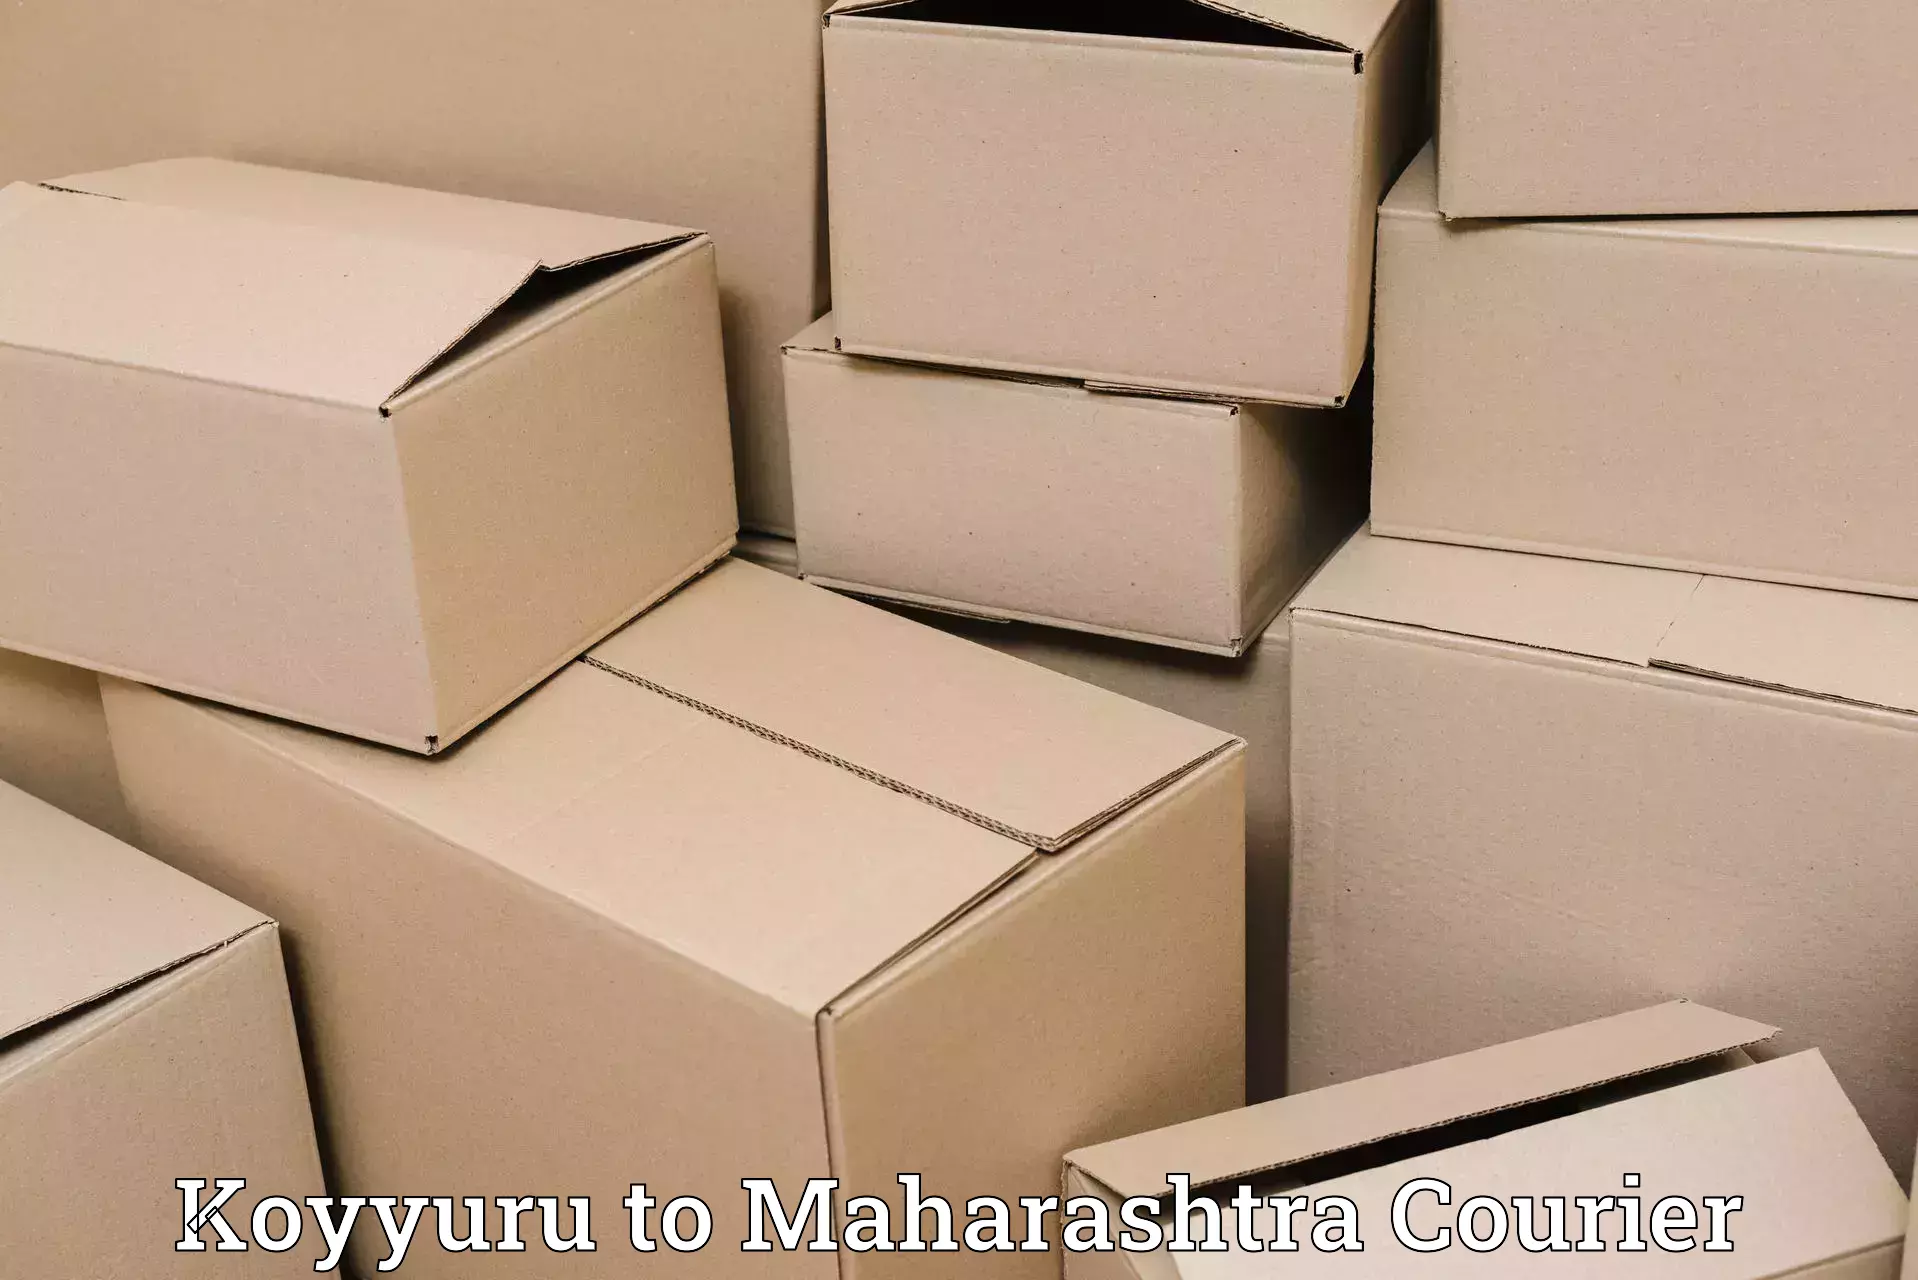 Nationwide delivery network Koyyuru to Mumbai